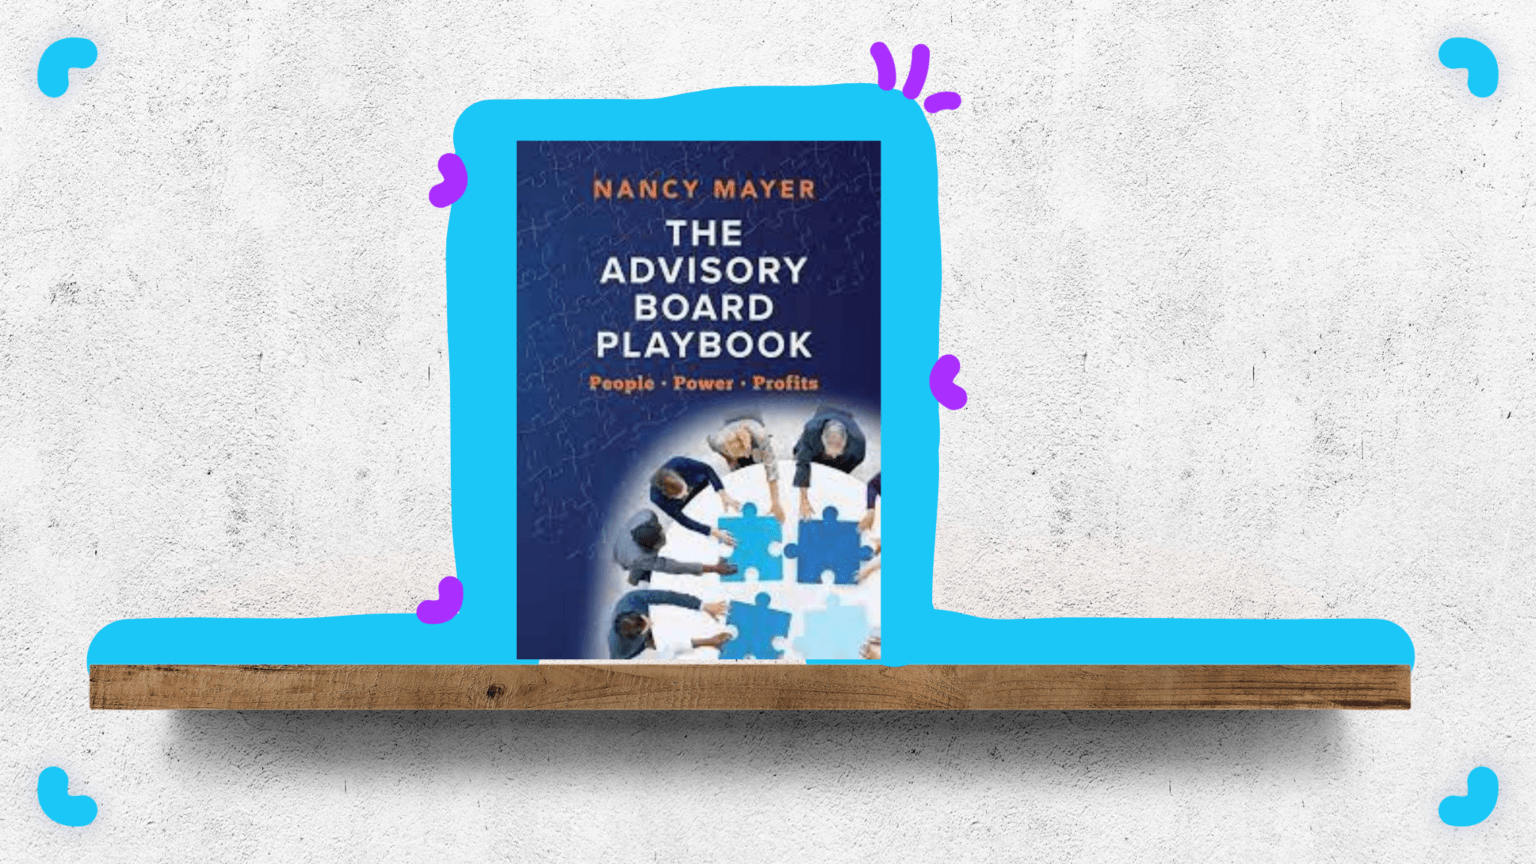 The advisory board playbook